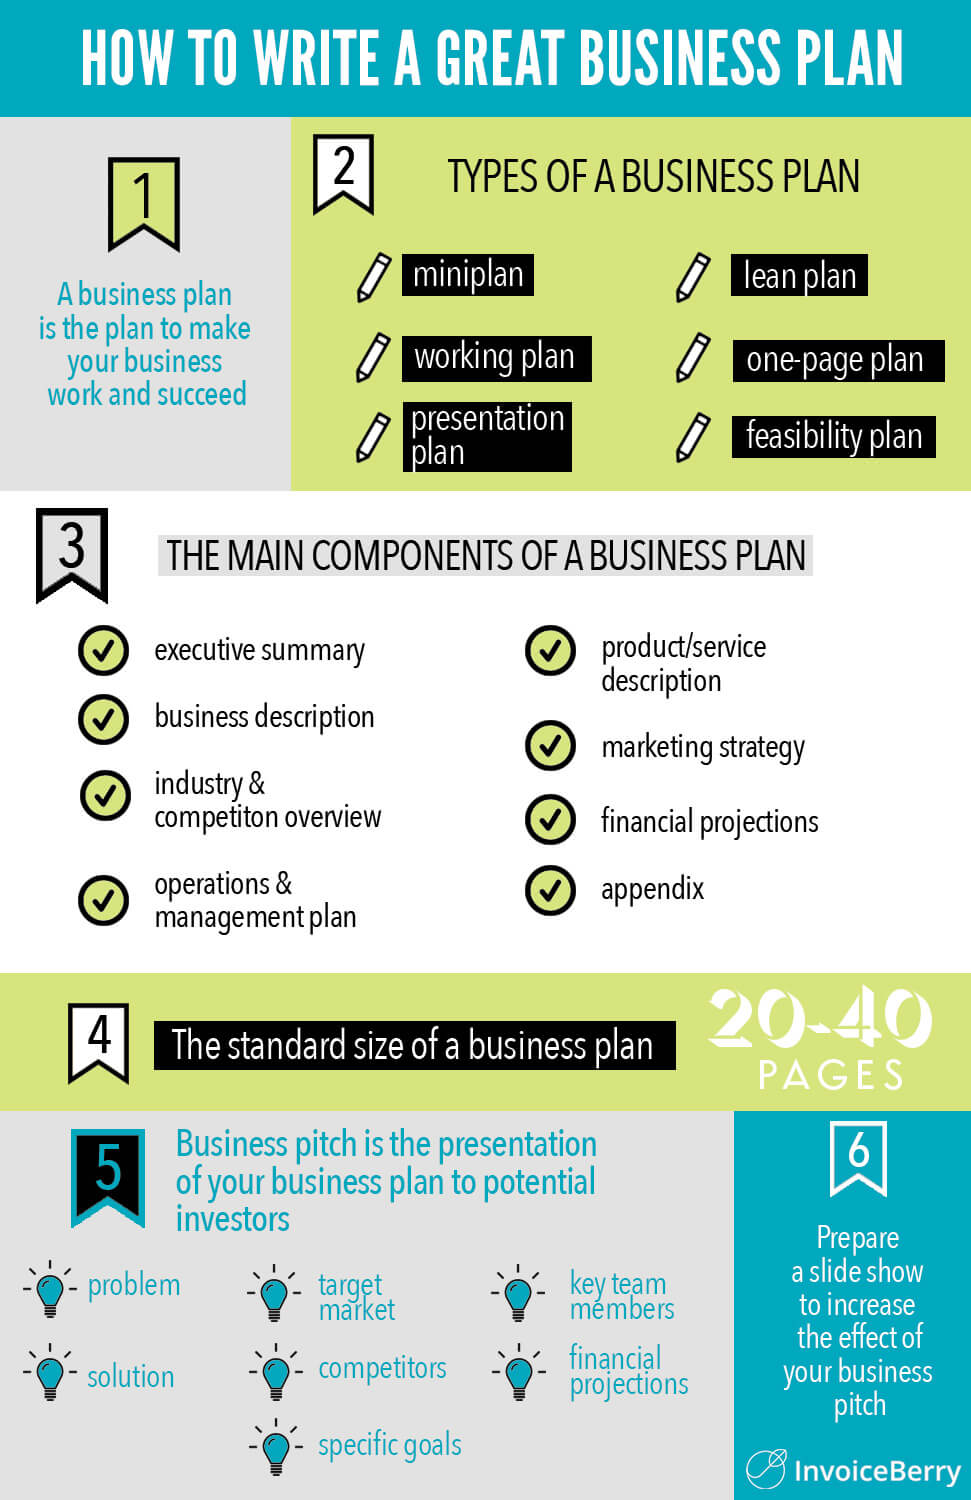 Who should write your business plan? - blogger.com